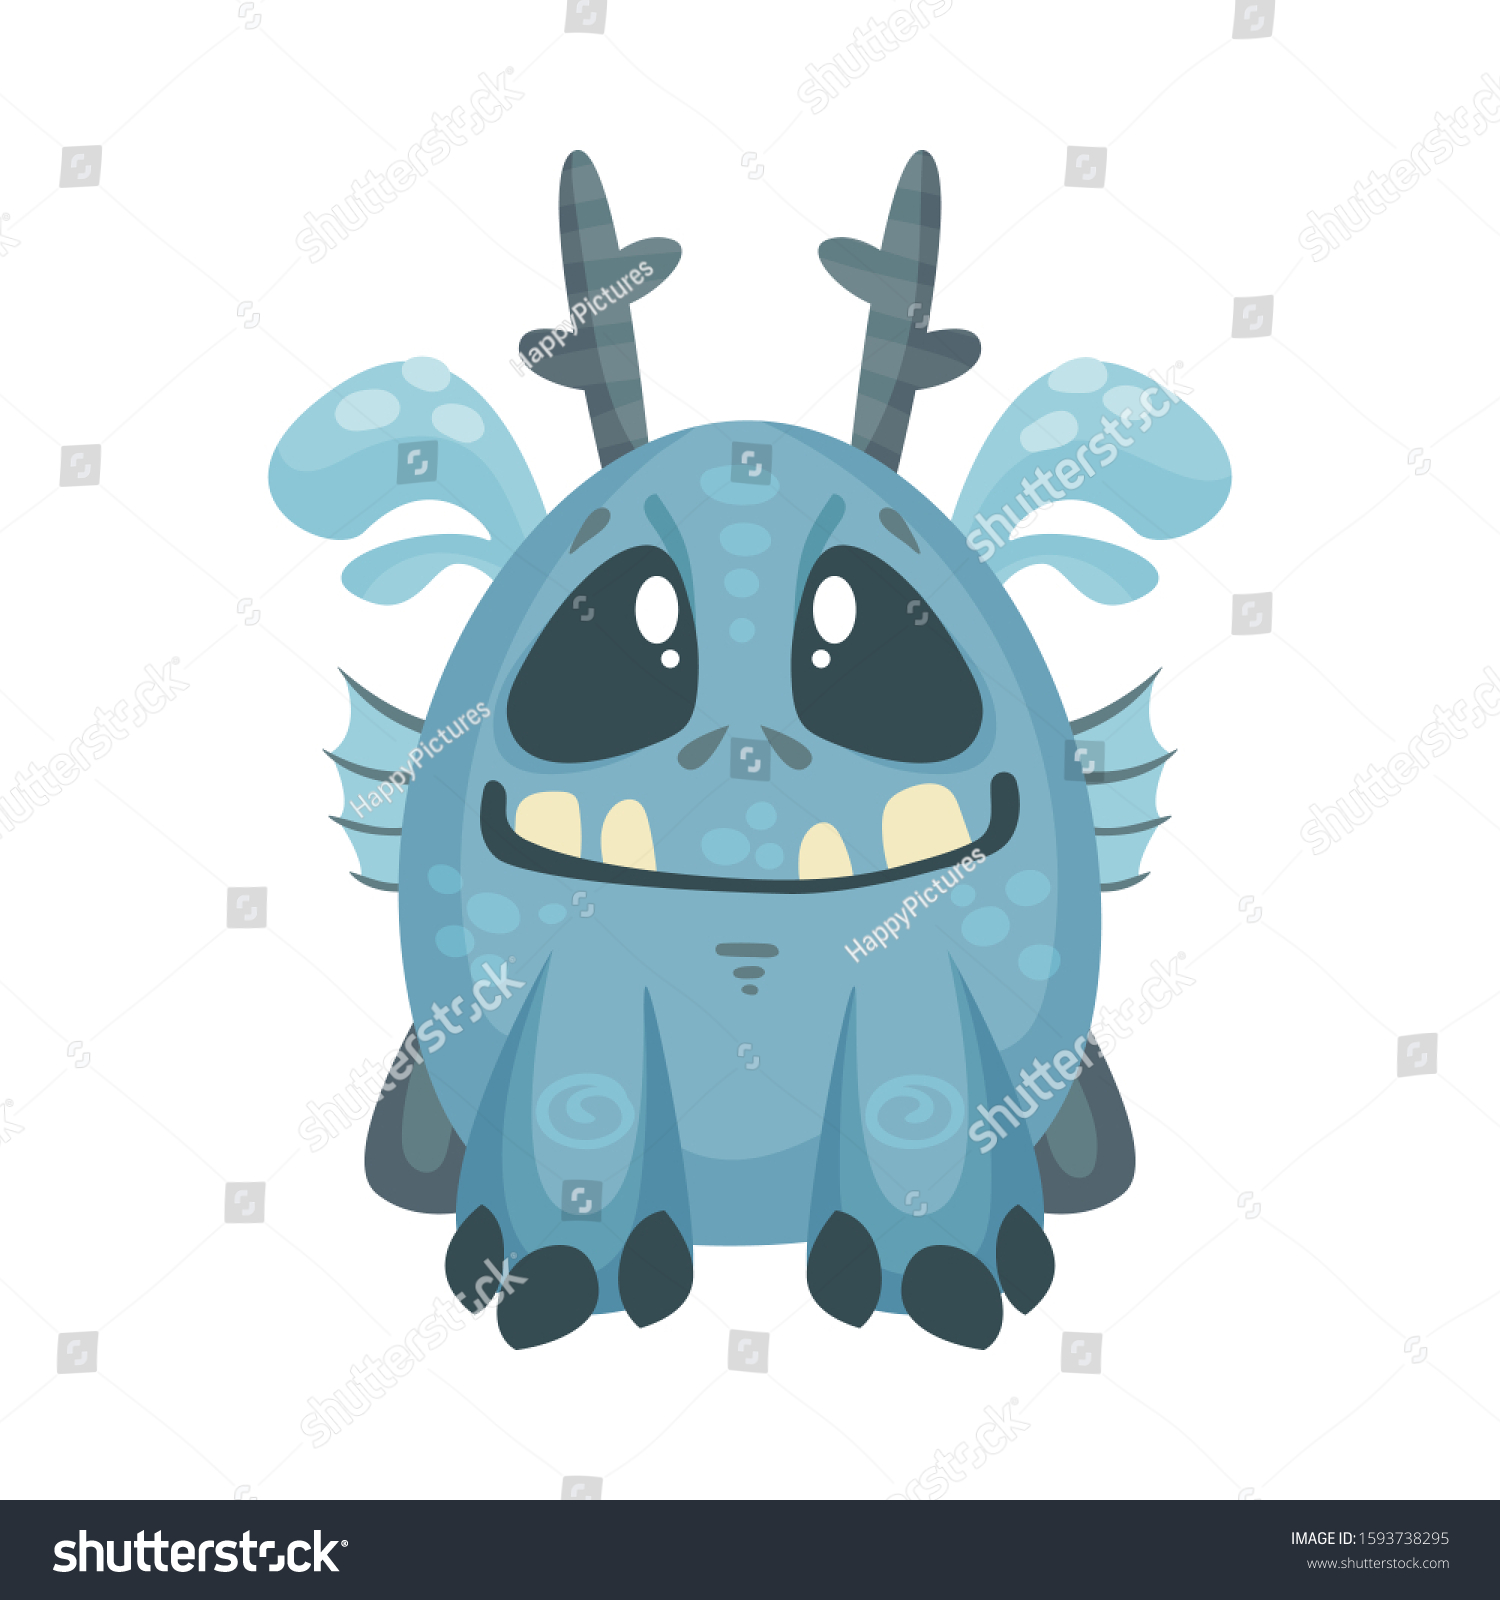 Cute Cartoon Smiling Monster Horns Vector Stock Vector Royalty Free Shutterstock